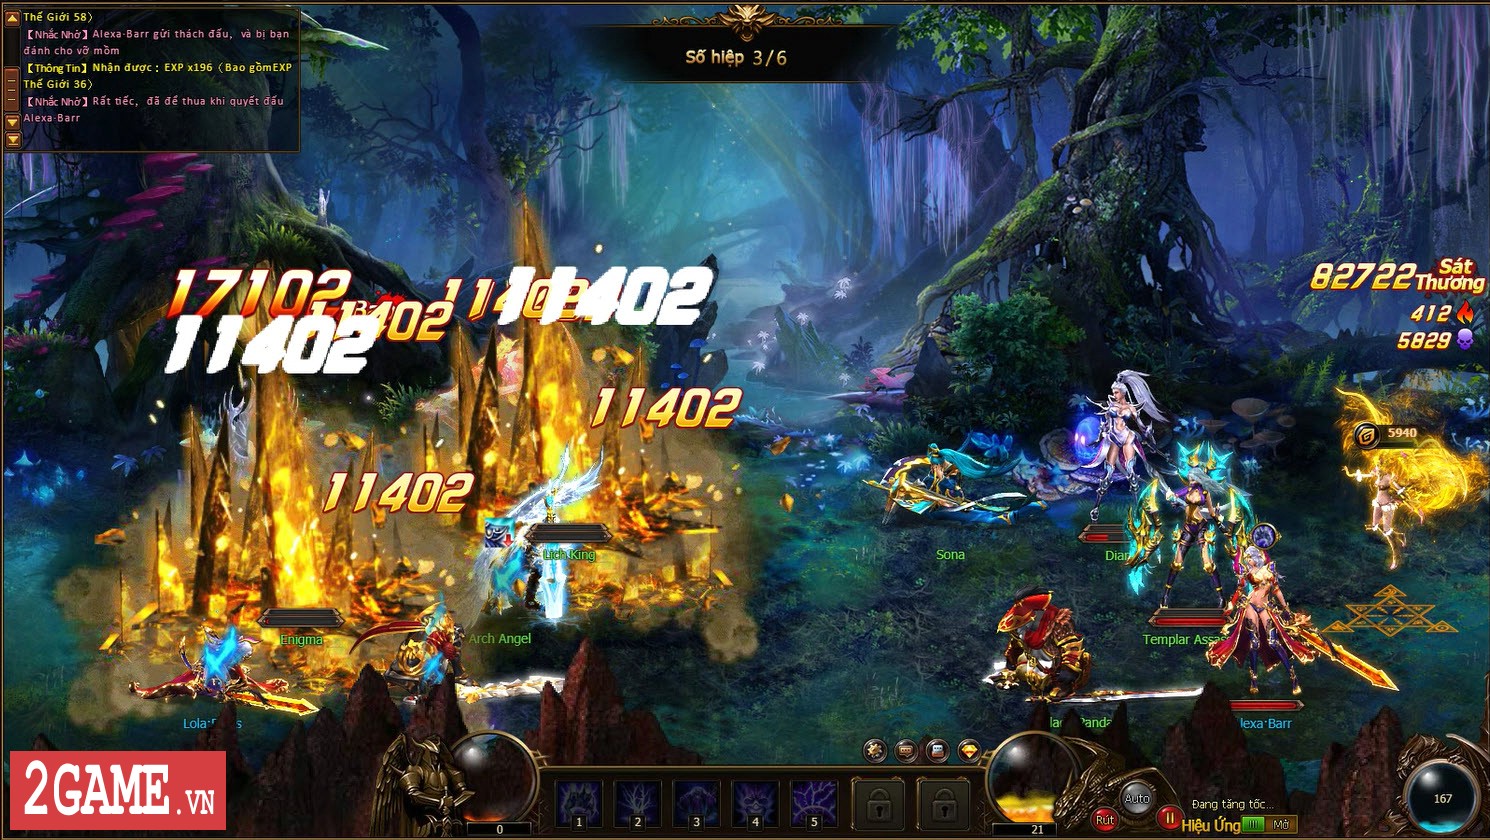 2game-webgame-game-of-dragons-hd-4.jpg (1490×840)